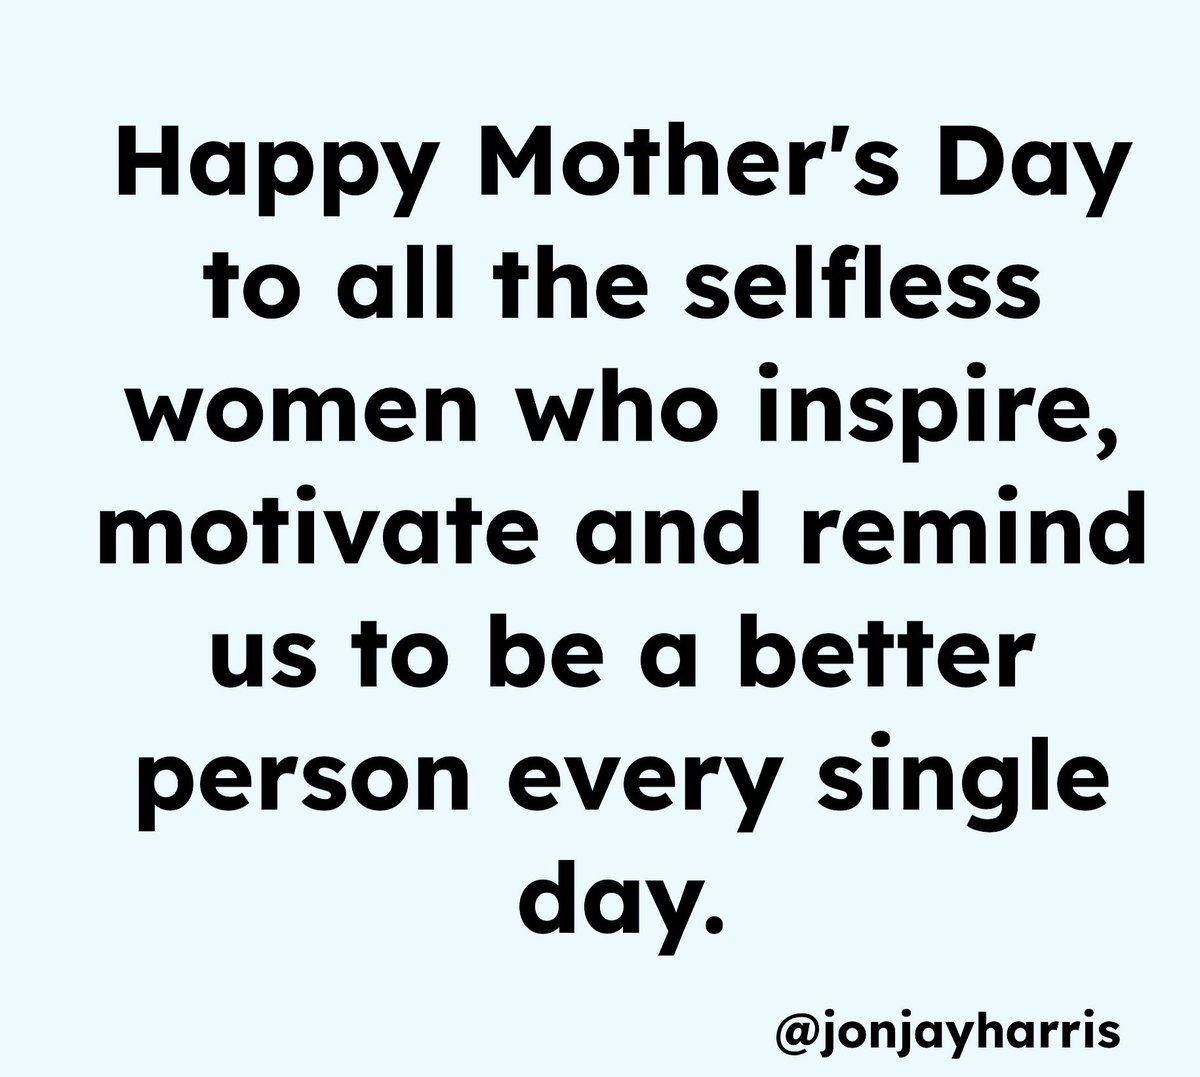 Happy Mother’s Day Words: #harrismint #words #wordsofwisdom #wordstoliveby #positivity #positivevibes #positivequotes #positive #grateful #gratitude #share